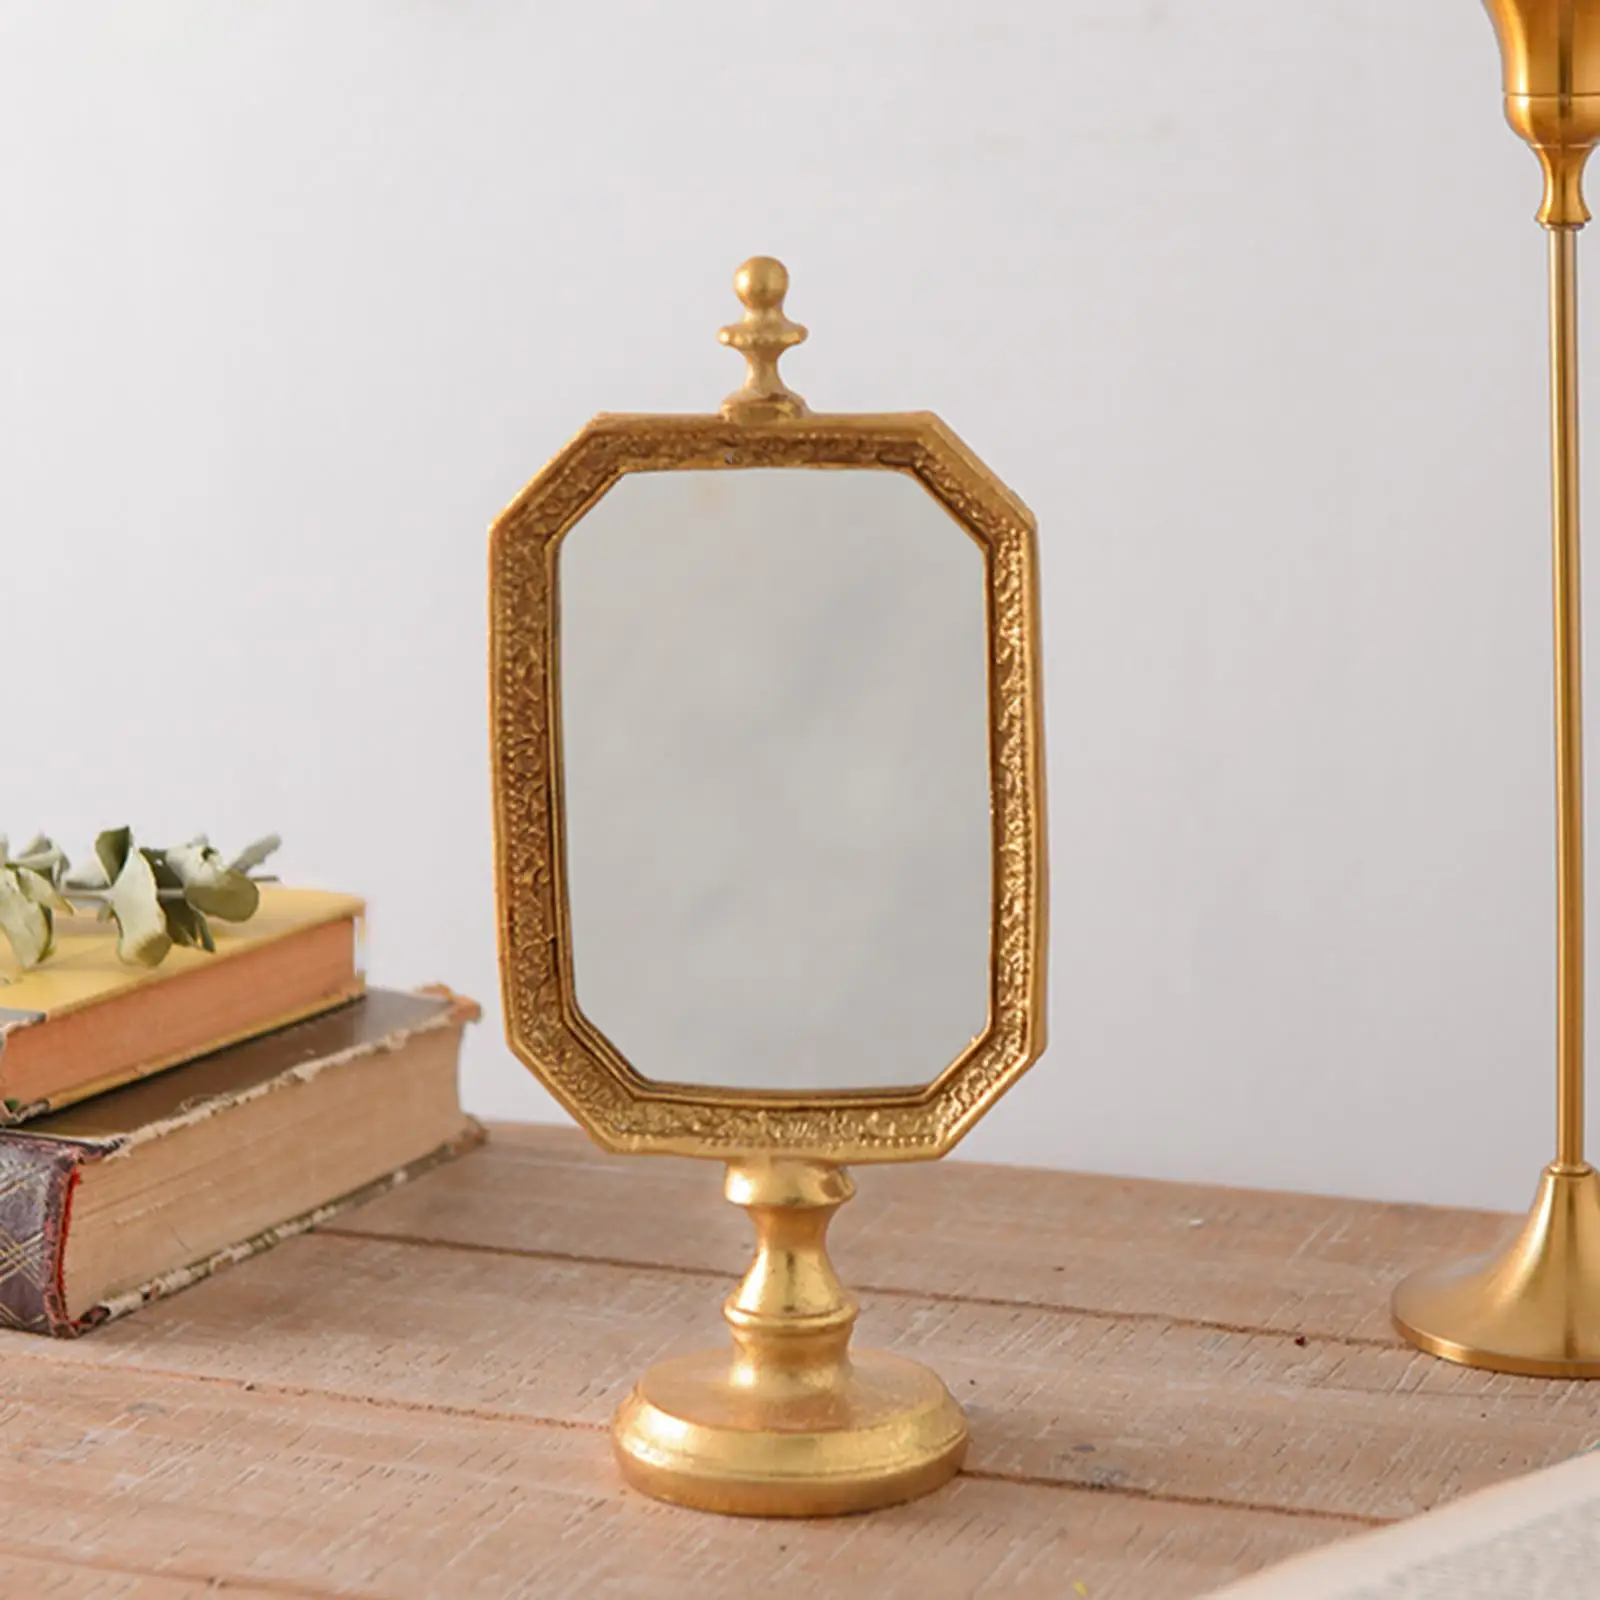 Antique Style Makeup Mirror Dresser Counter Display Tabletop Mirror Cosmtic Mirror Vanity Mirror for Tabletop Bedroom Hotel Home